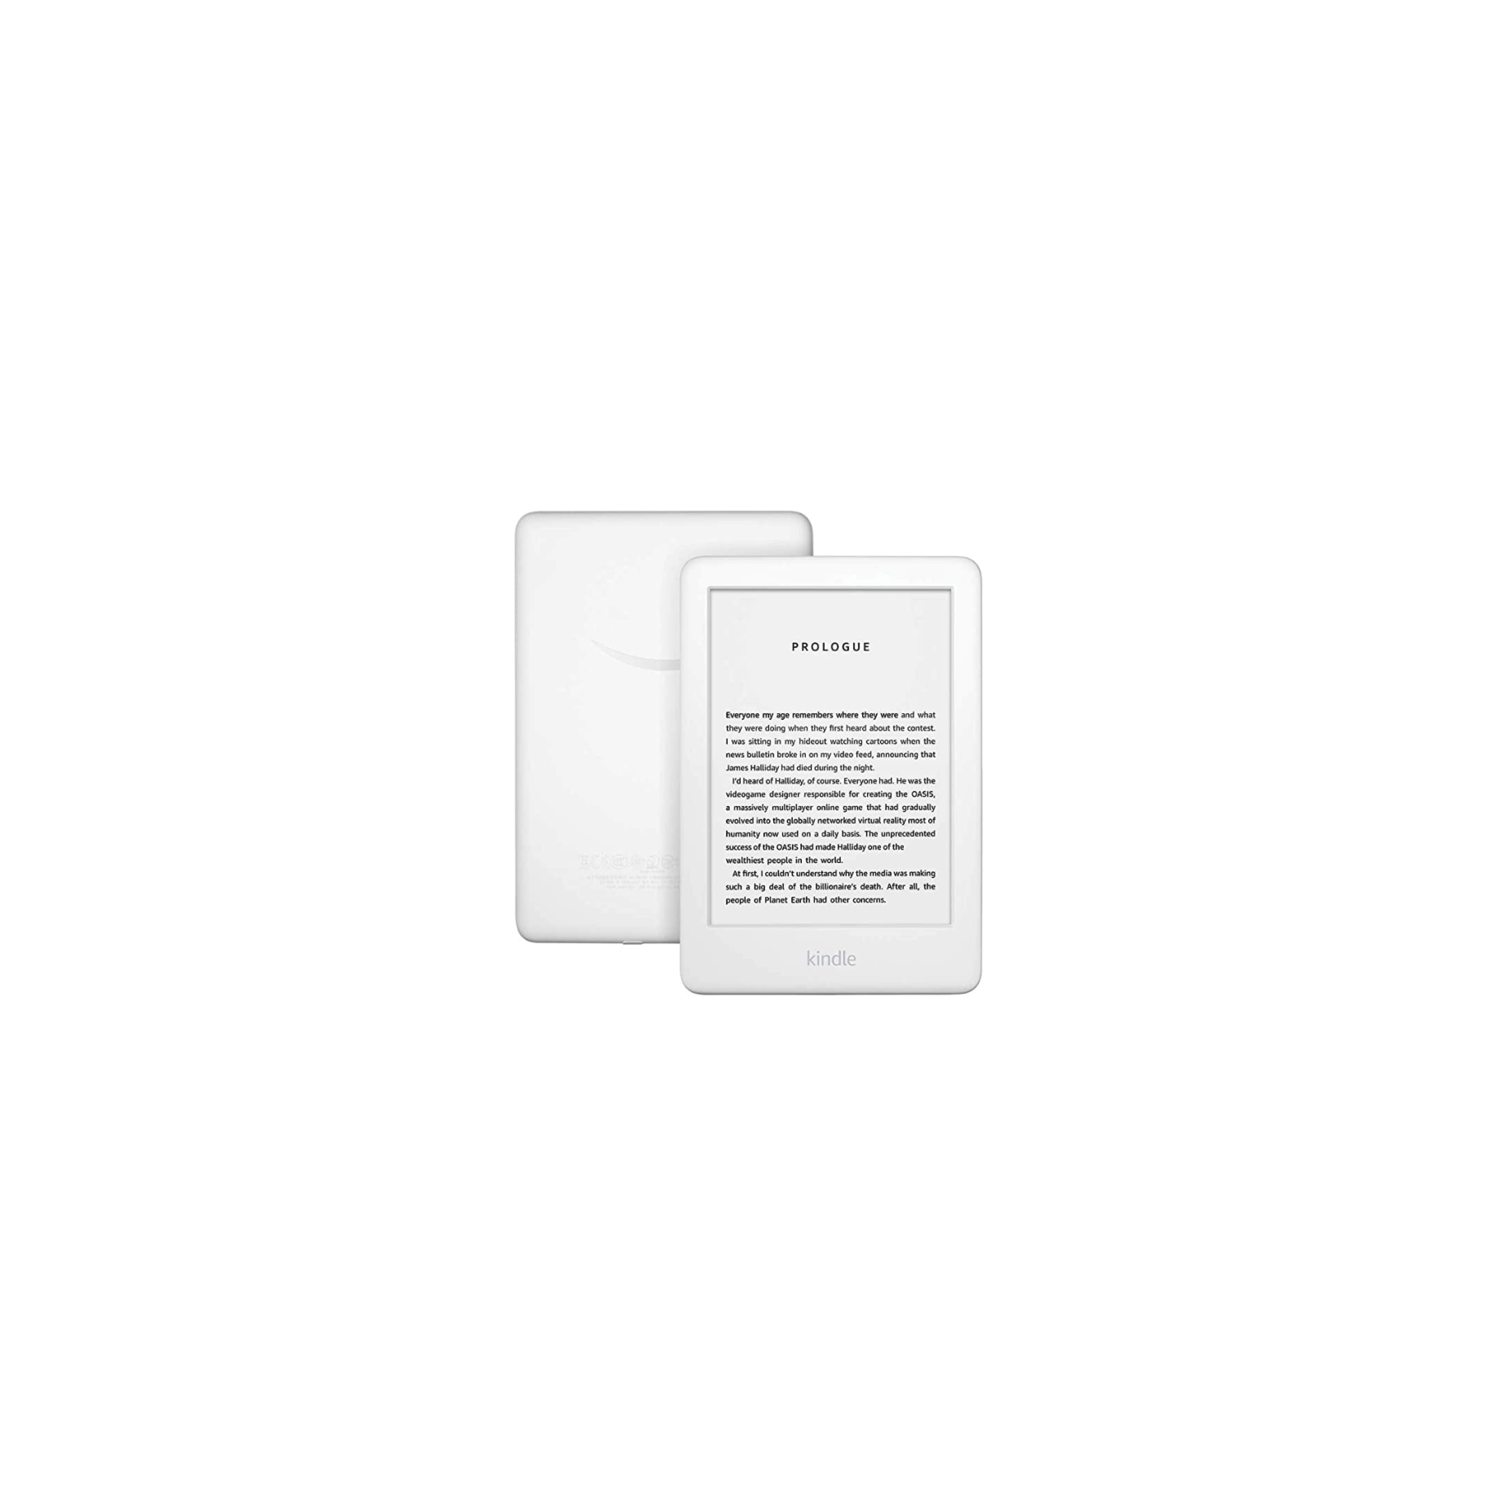 Amazon Kindle 2019 (WiFi) (8GB, White) - Brand New